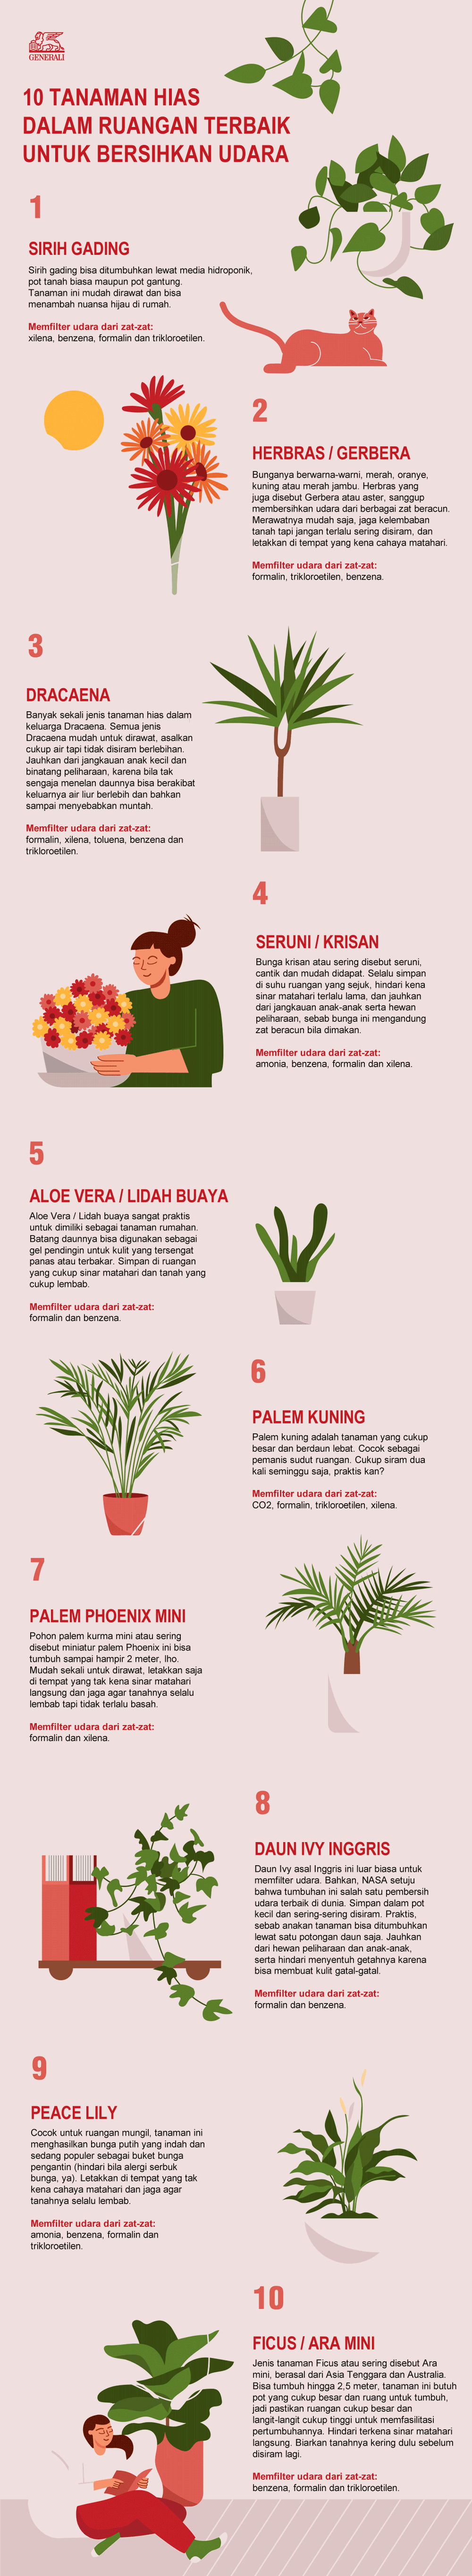 10 tanaman hias untuk membersihkan udara dalam rumah